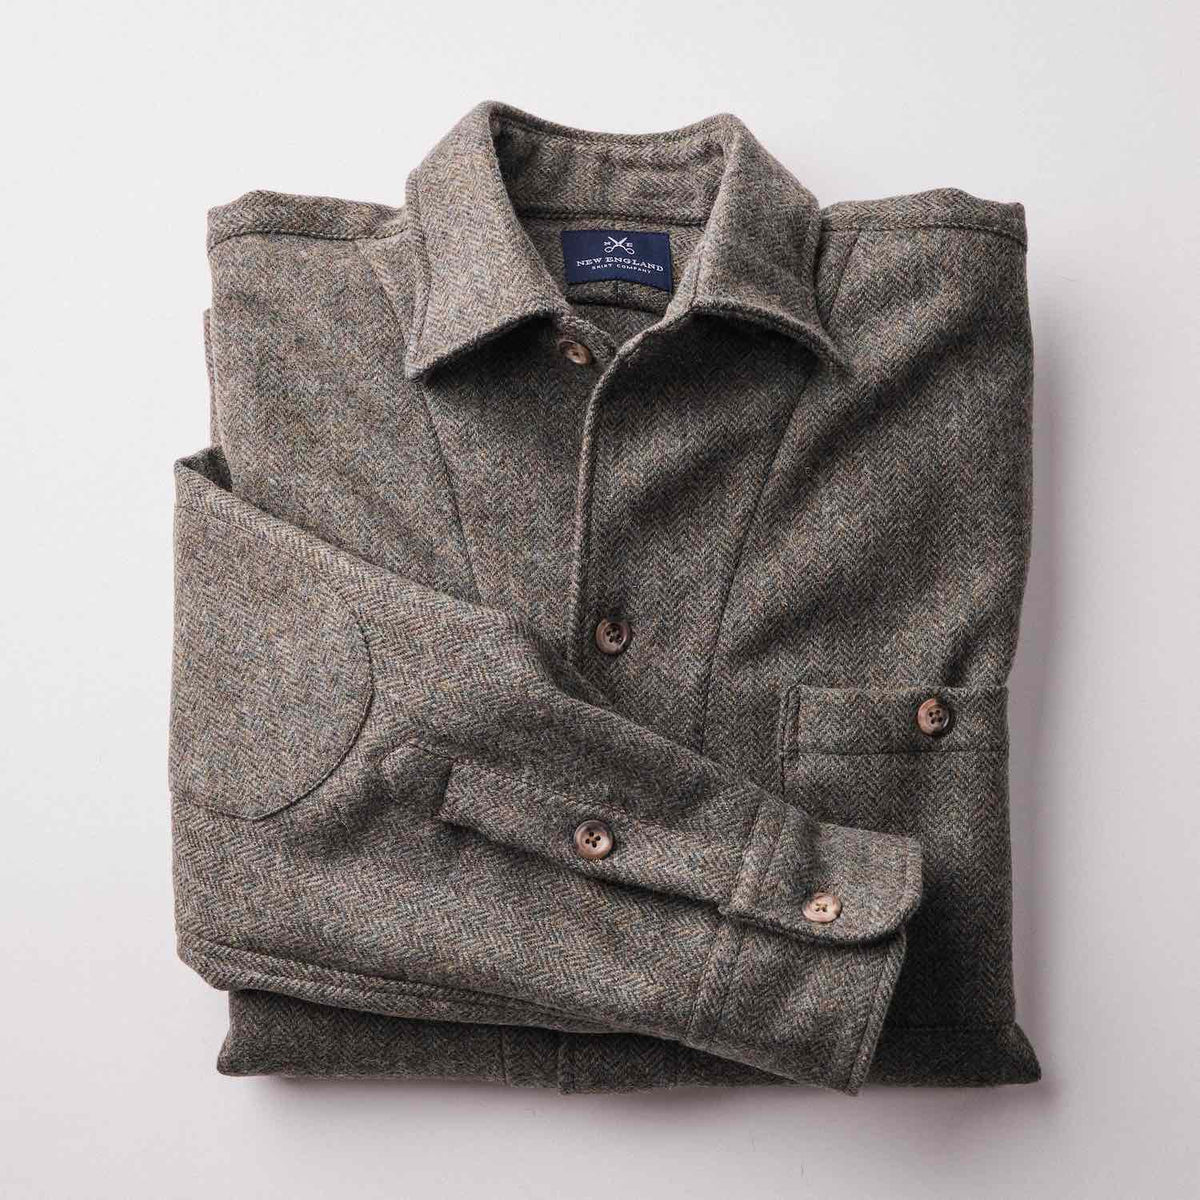 AWC Wool Tweed Olive Wye Shirt Jacket